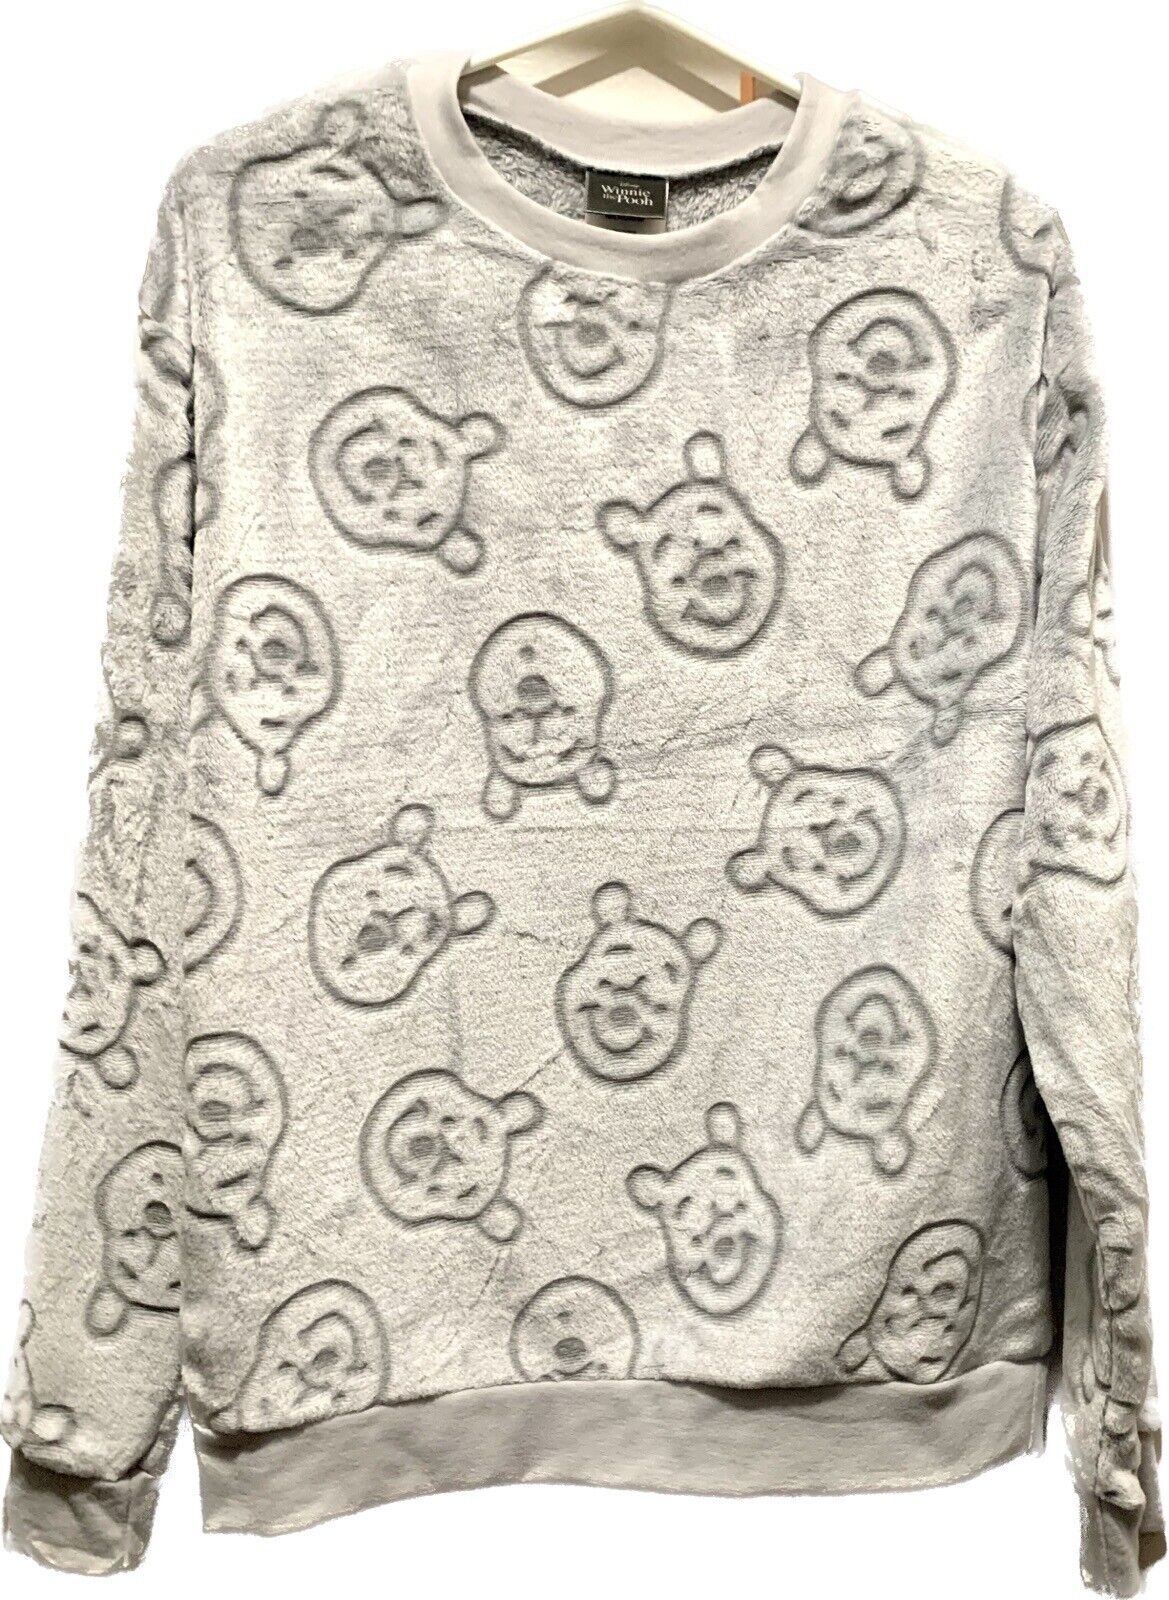 Disney Winnie The Pooh Women’s Sweatshirt Size Medium, Cozy Soft Sweater Cute